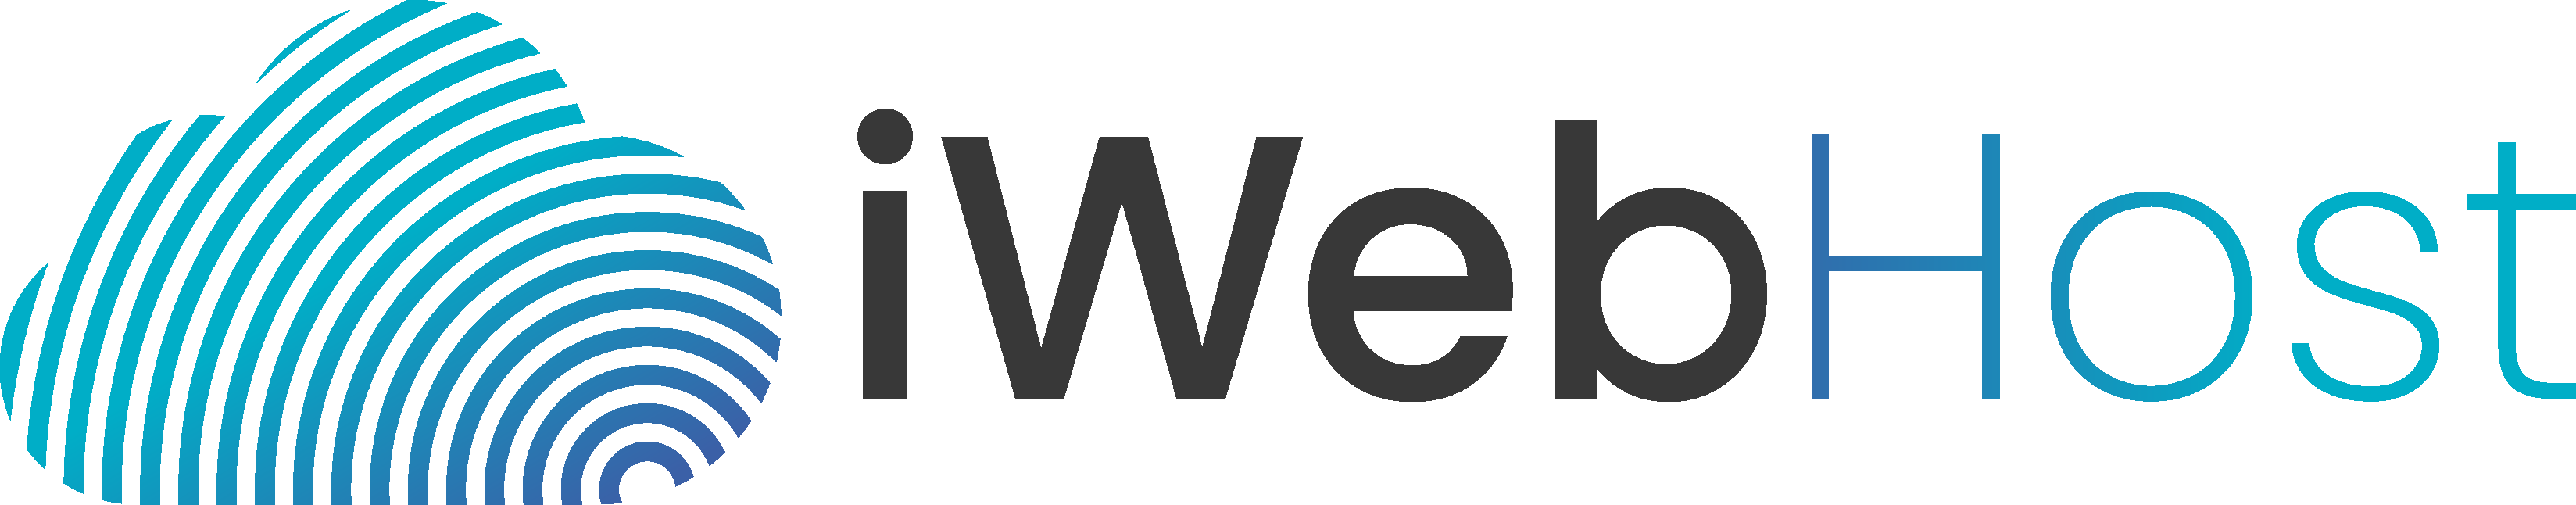 iwebhost logo